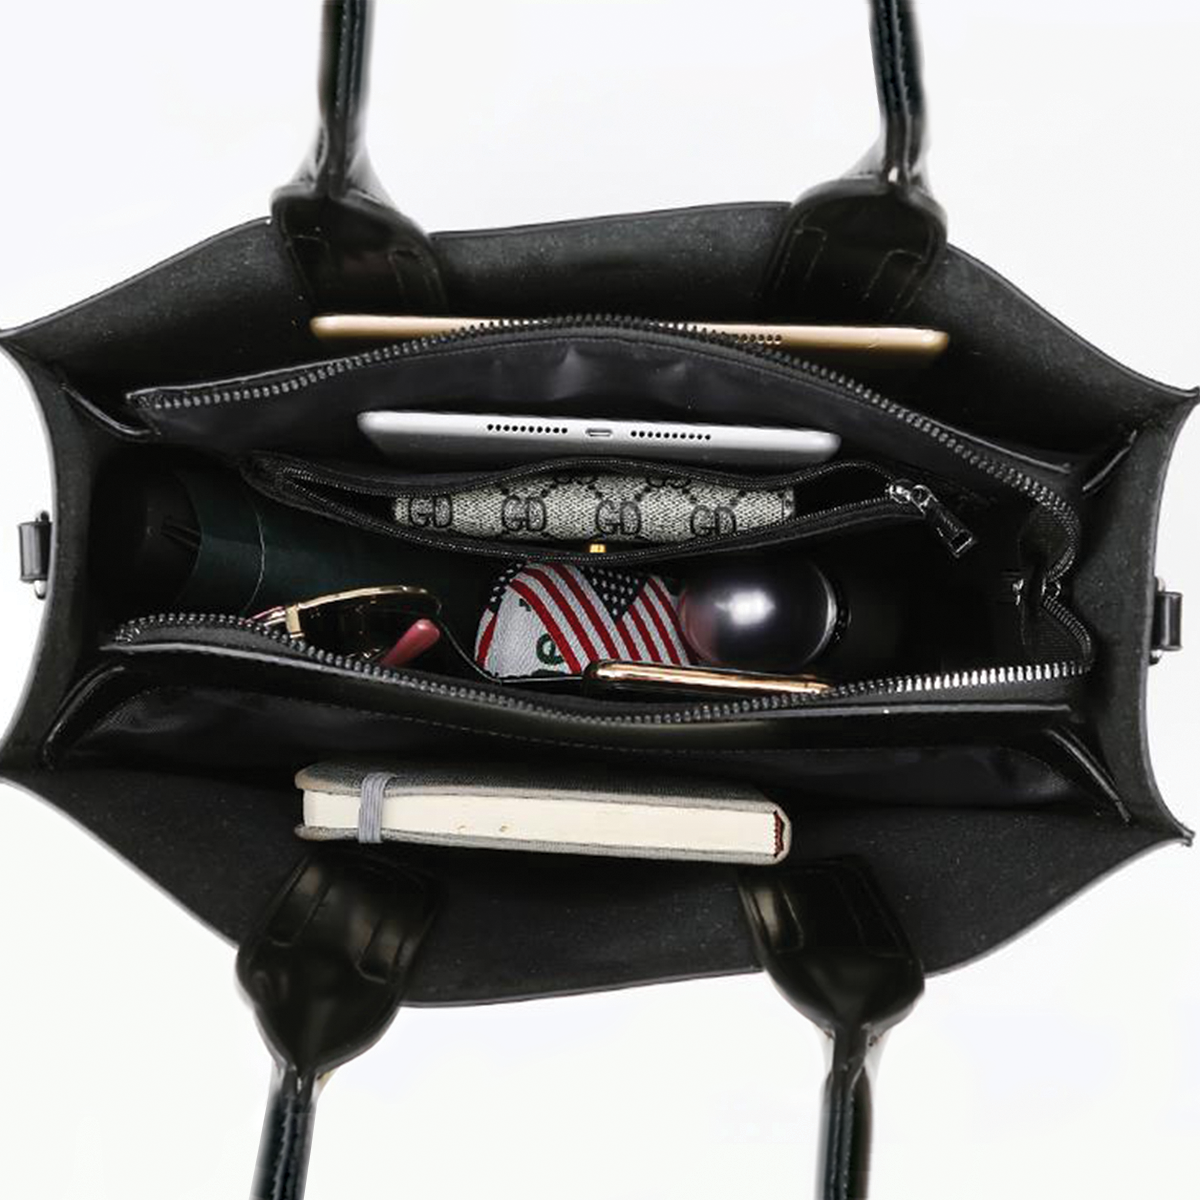 Reduce Stress At Work With Tibetan Spaniel - Luxury Handbag V1